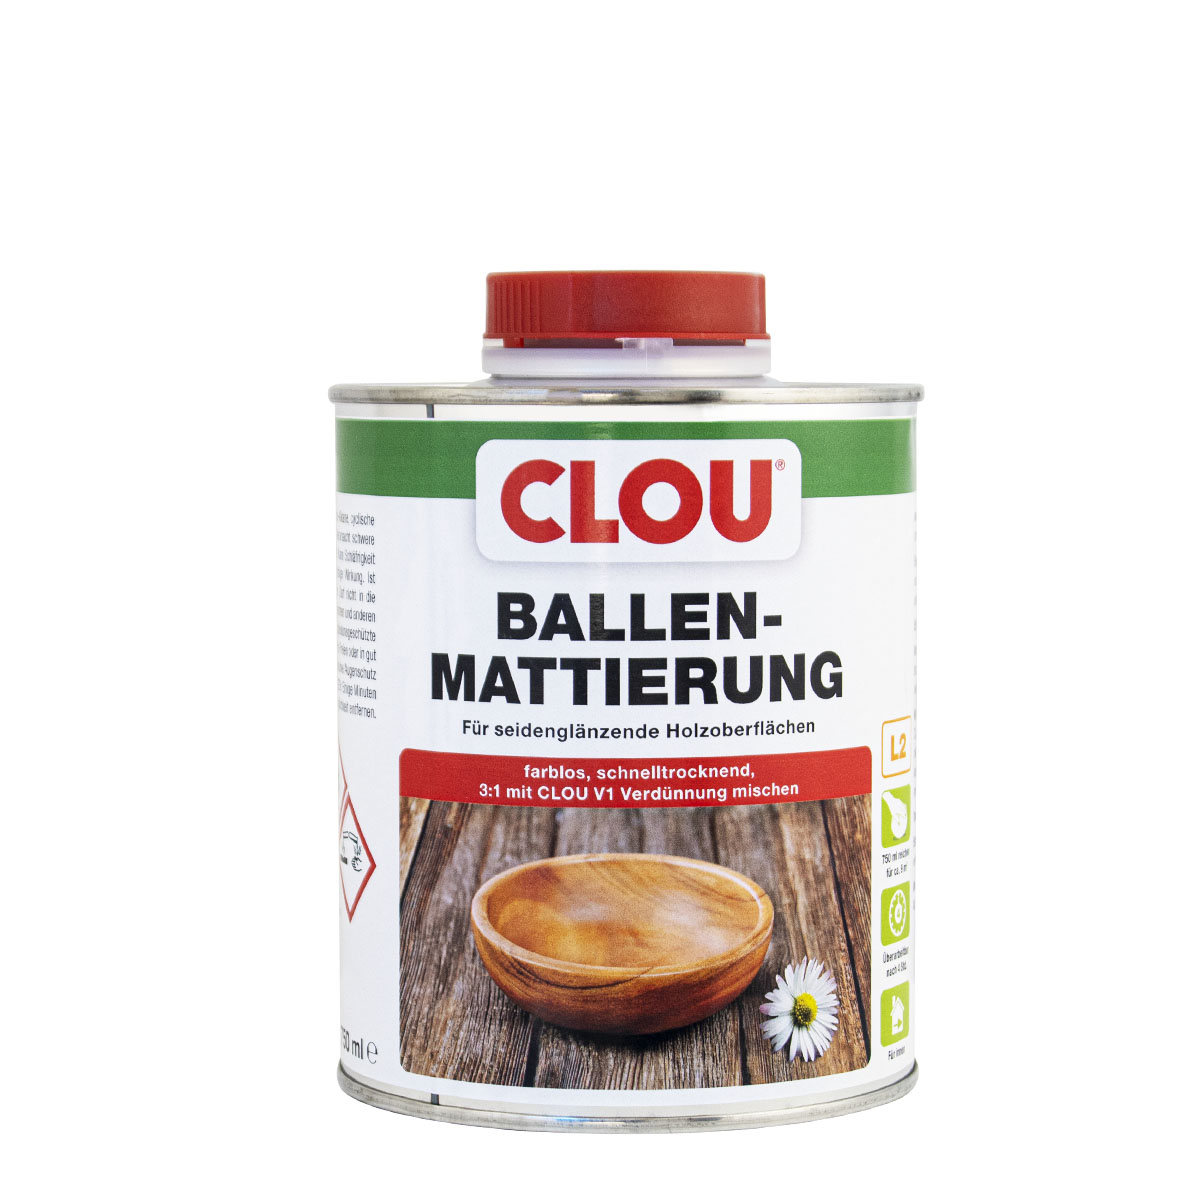 Clou L2 Ballen-Mattierung 750ml farblos, für seidenglänzende Holzoberflächen